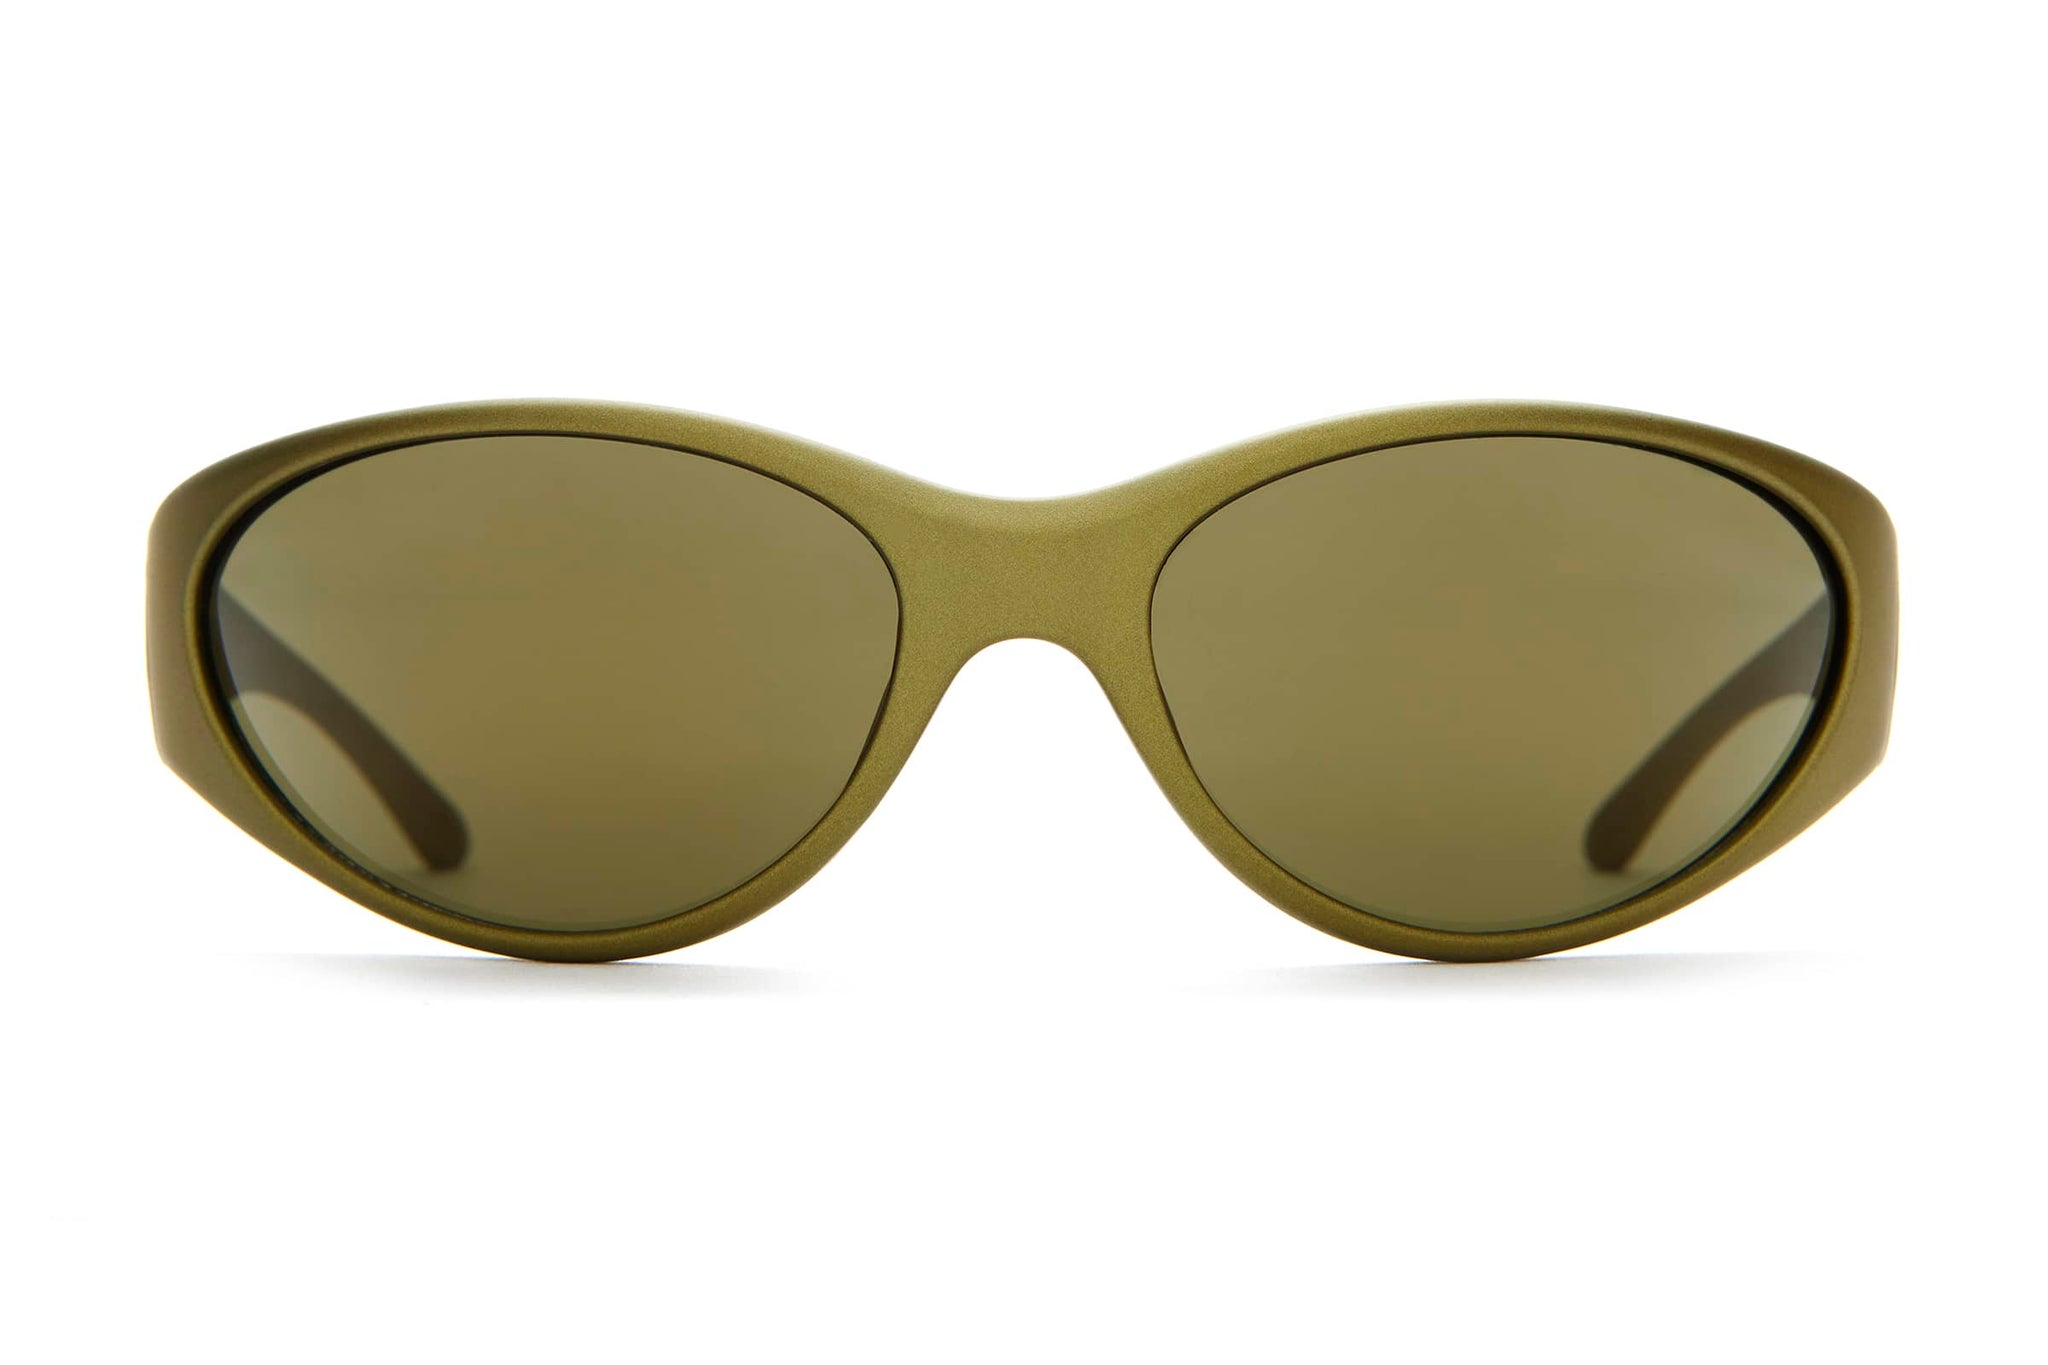 Fly fishing eye glasses, fashion Stock Photo